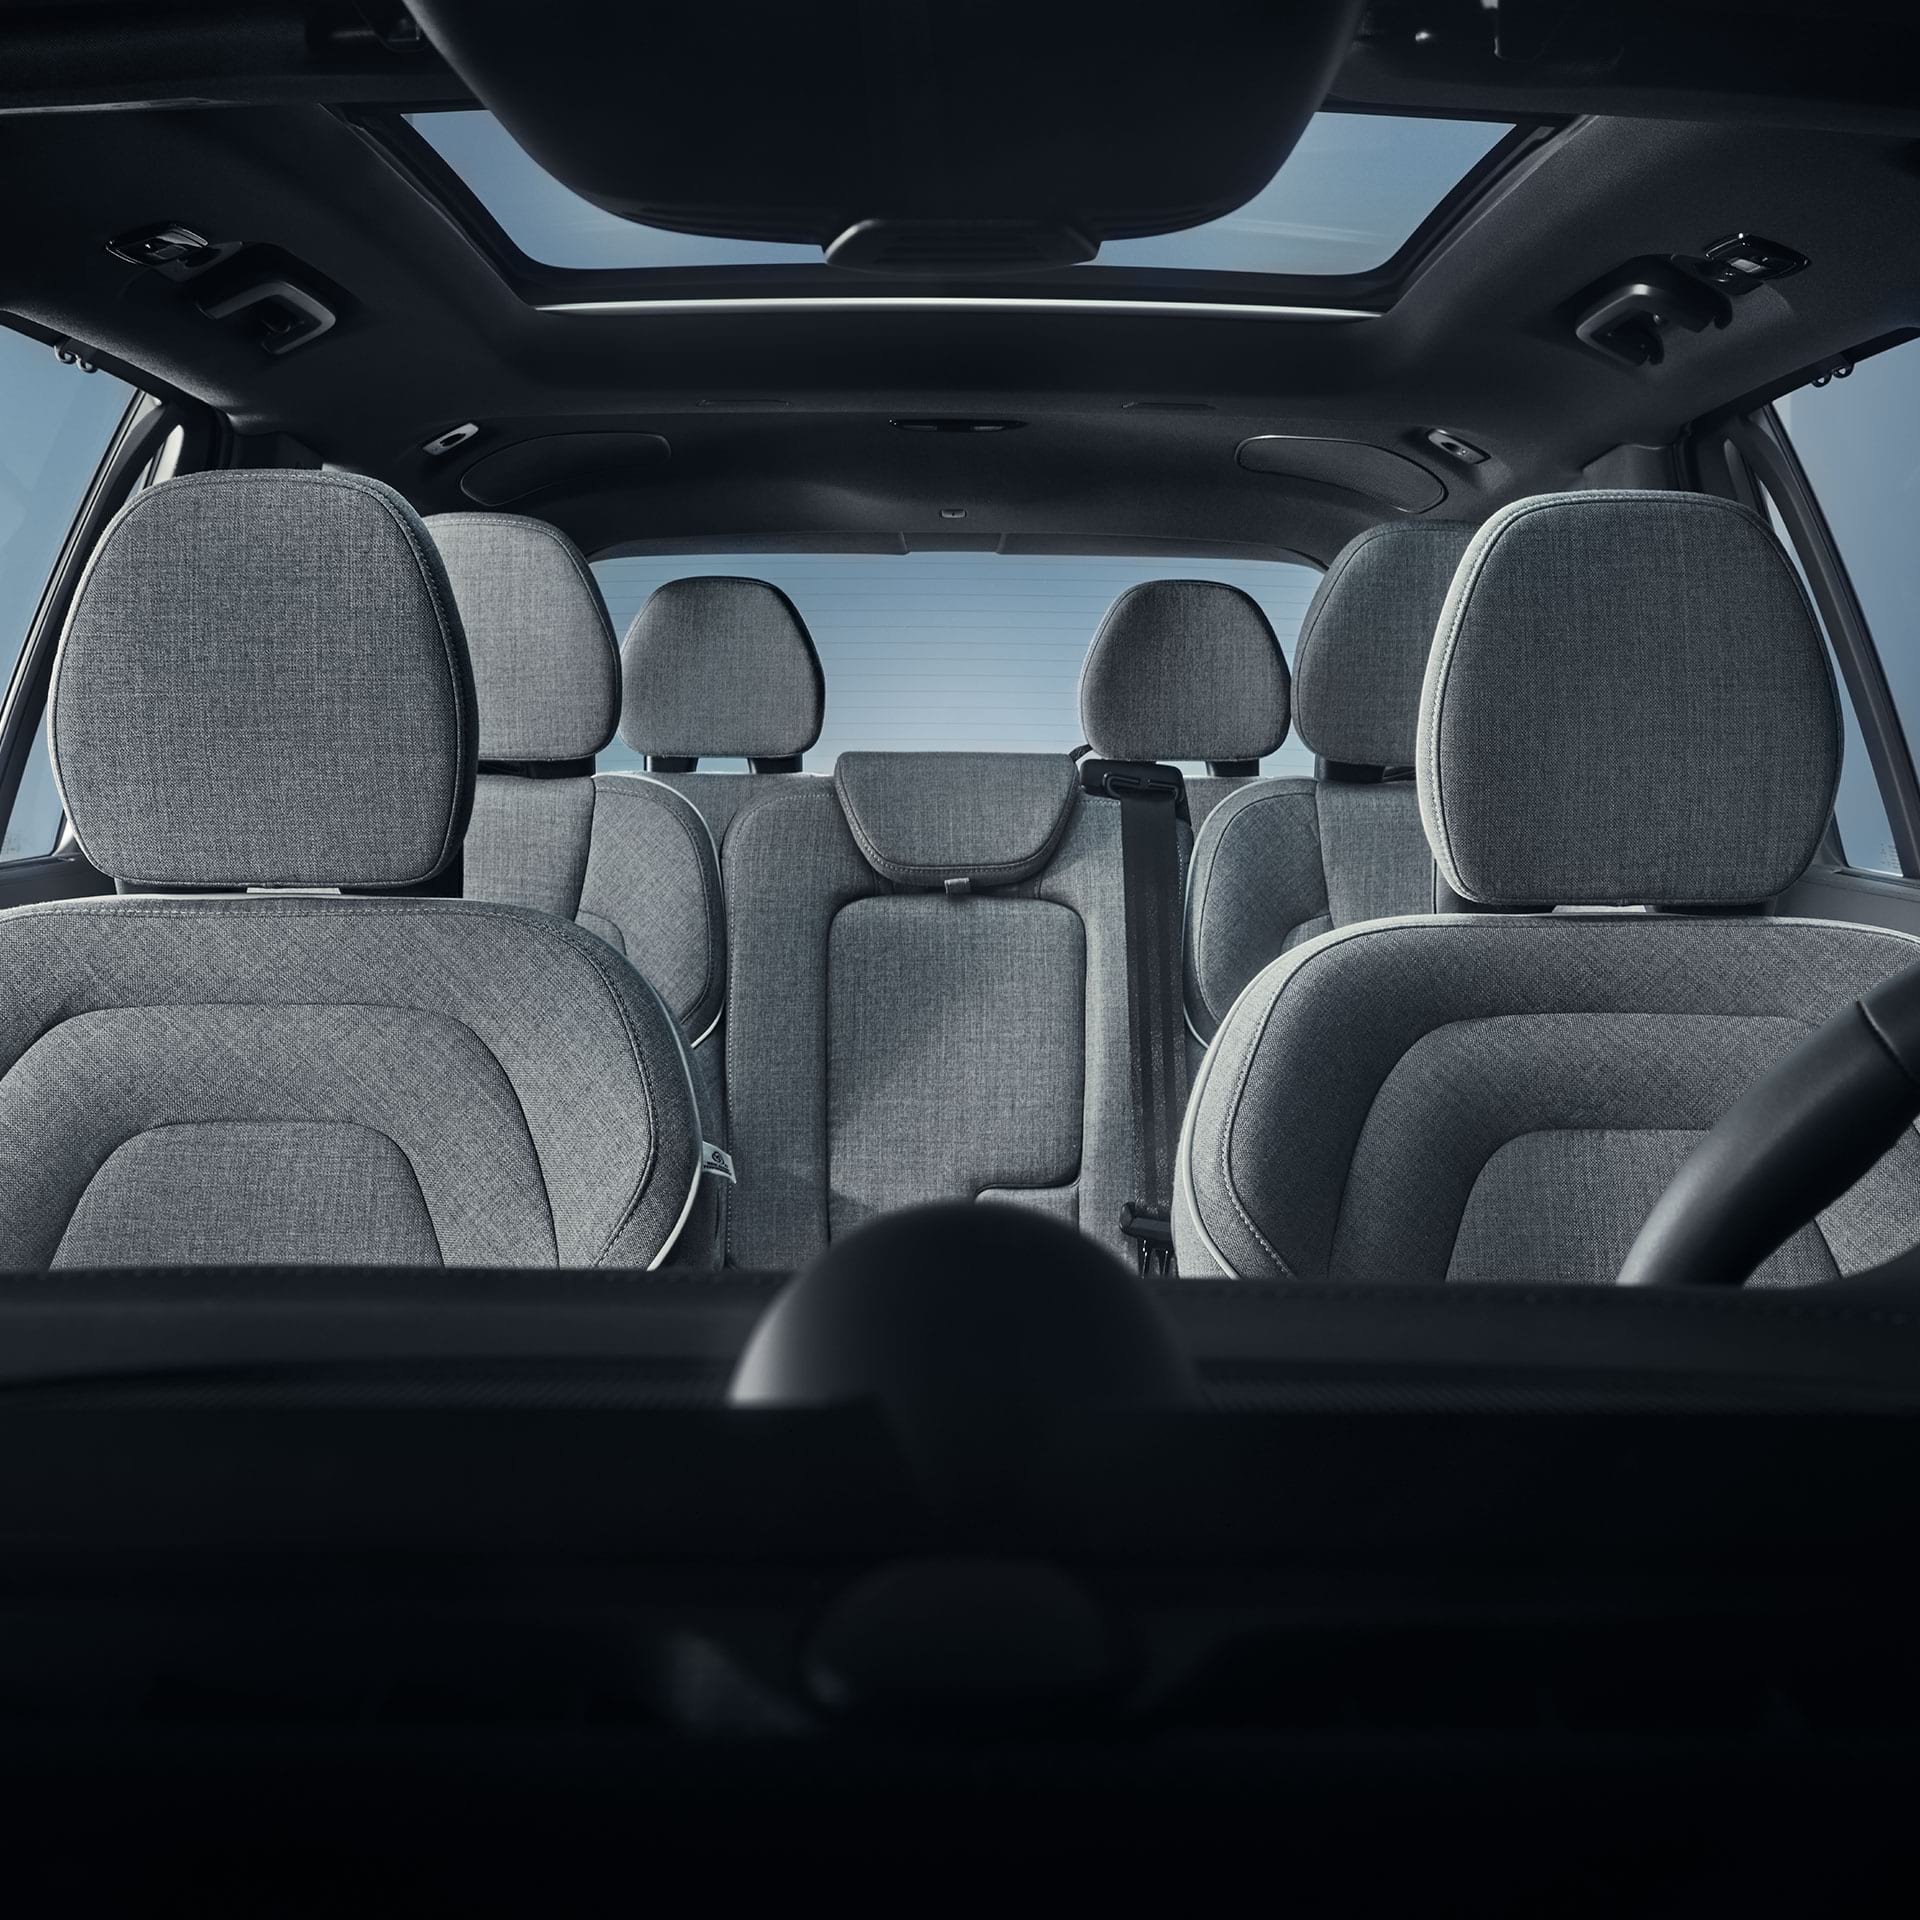 Prostrana i luksuzna unutrašnjost kabine modela Volvo XC90 Recharge.